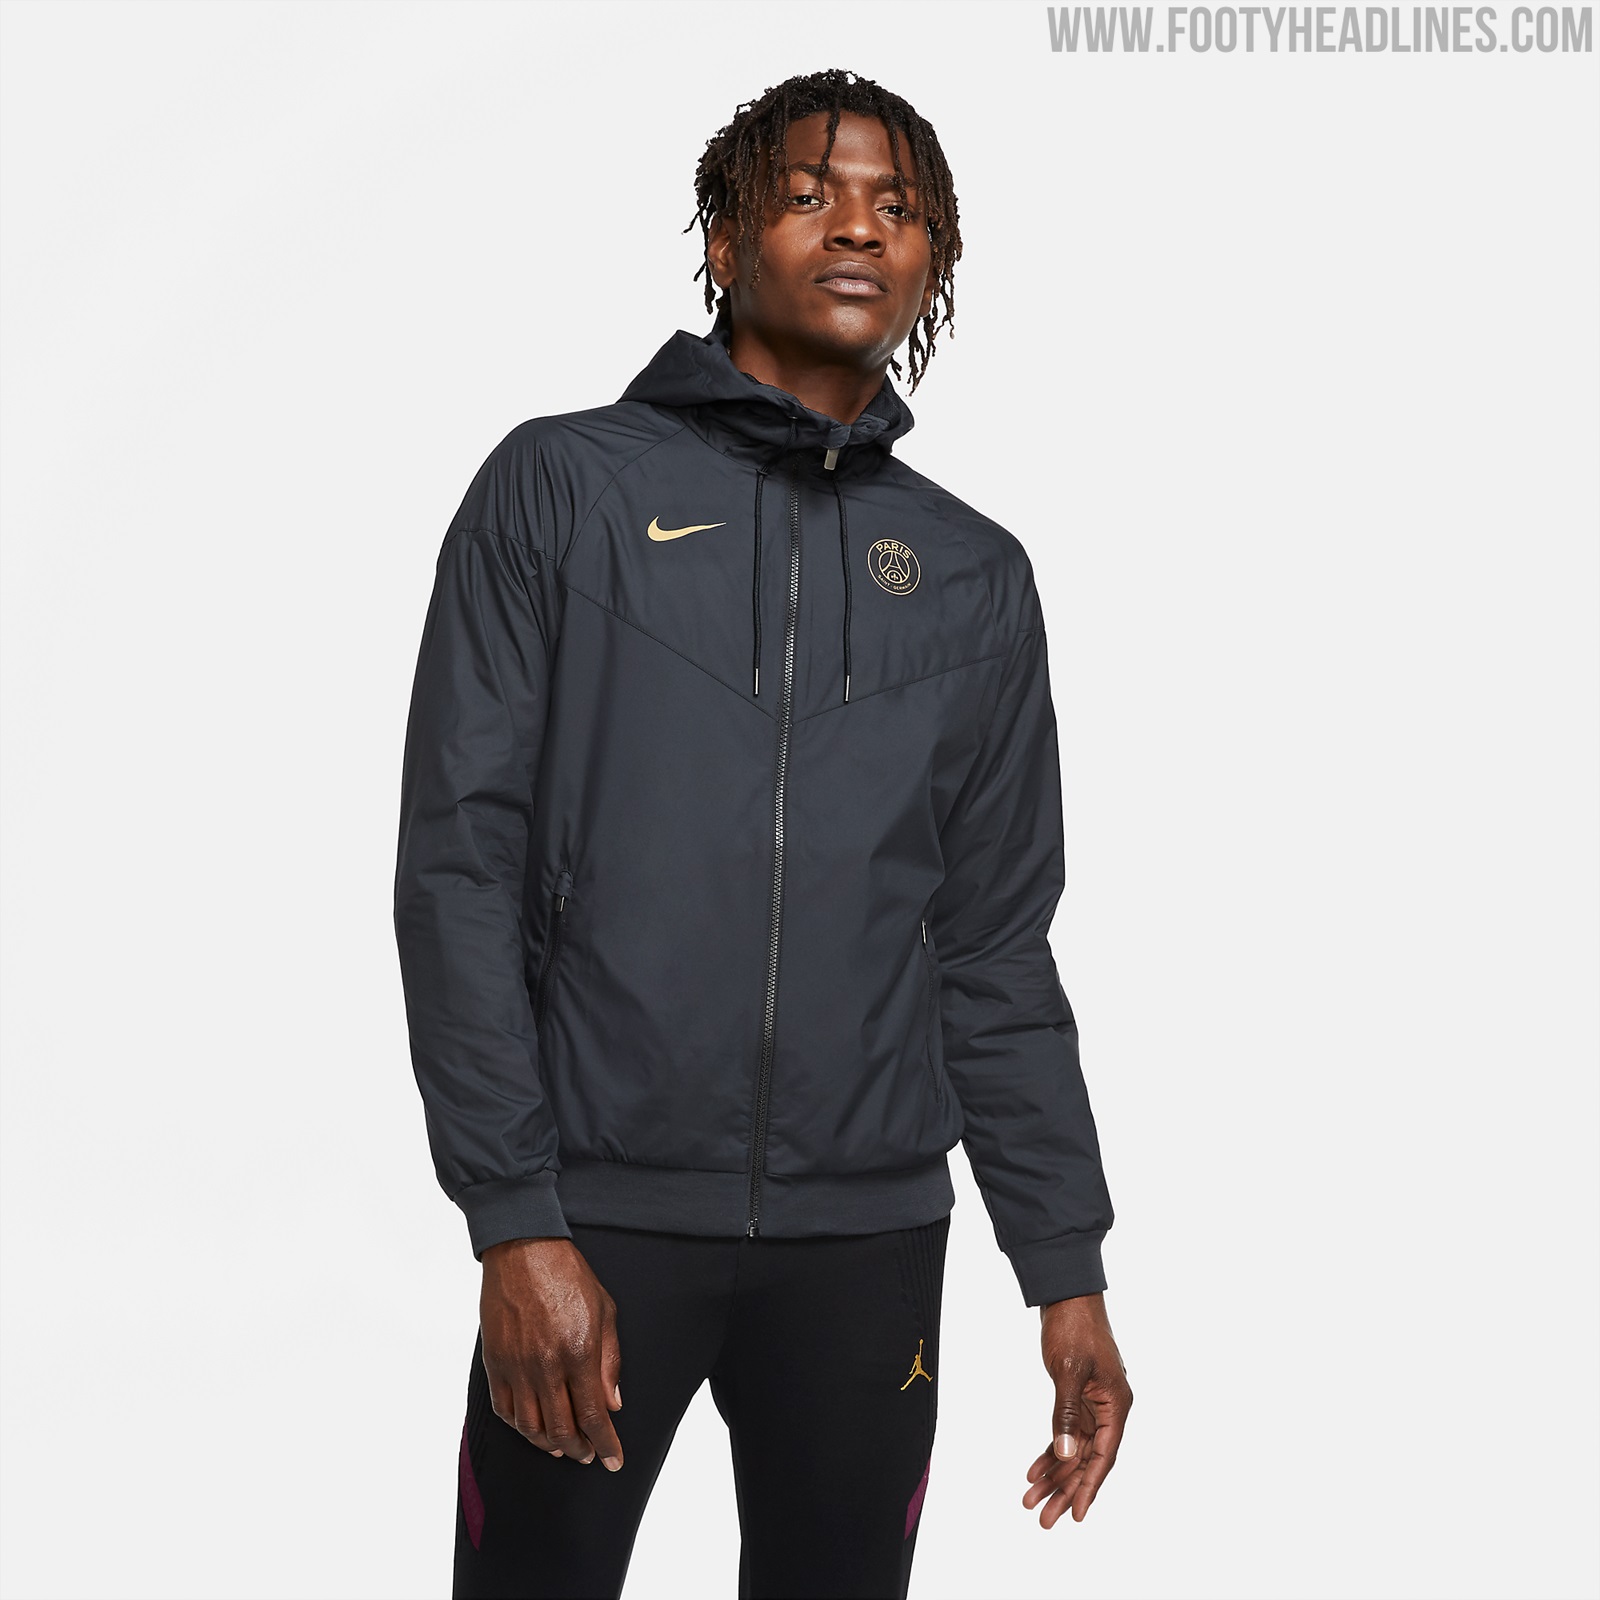 Nike Paris Saint-Germain 2020 50 Ans Collection Released - Footy Headlines